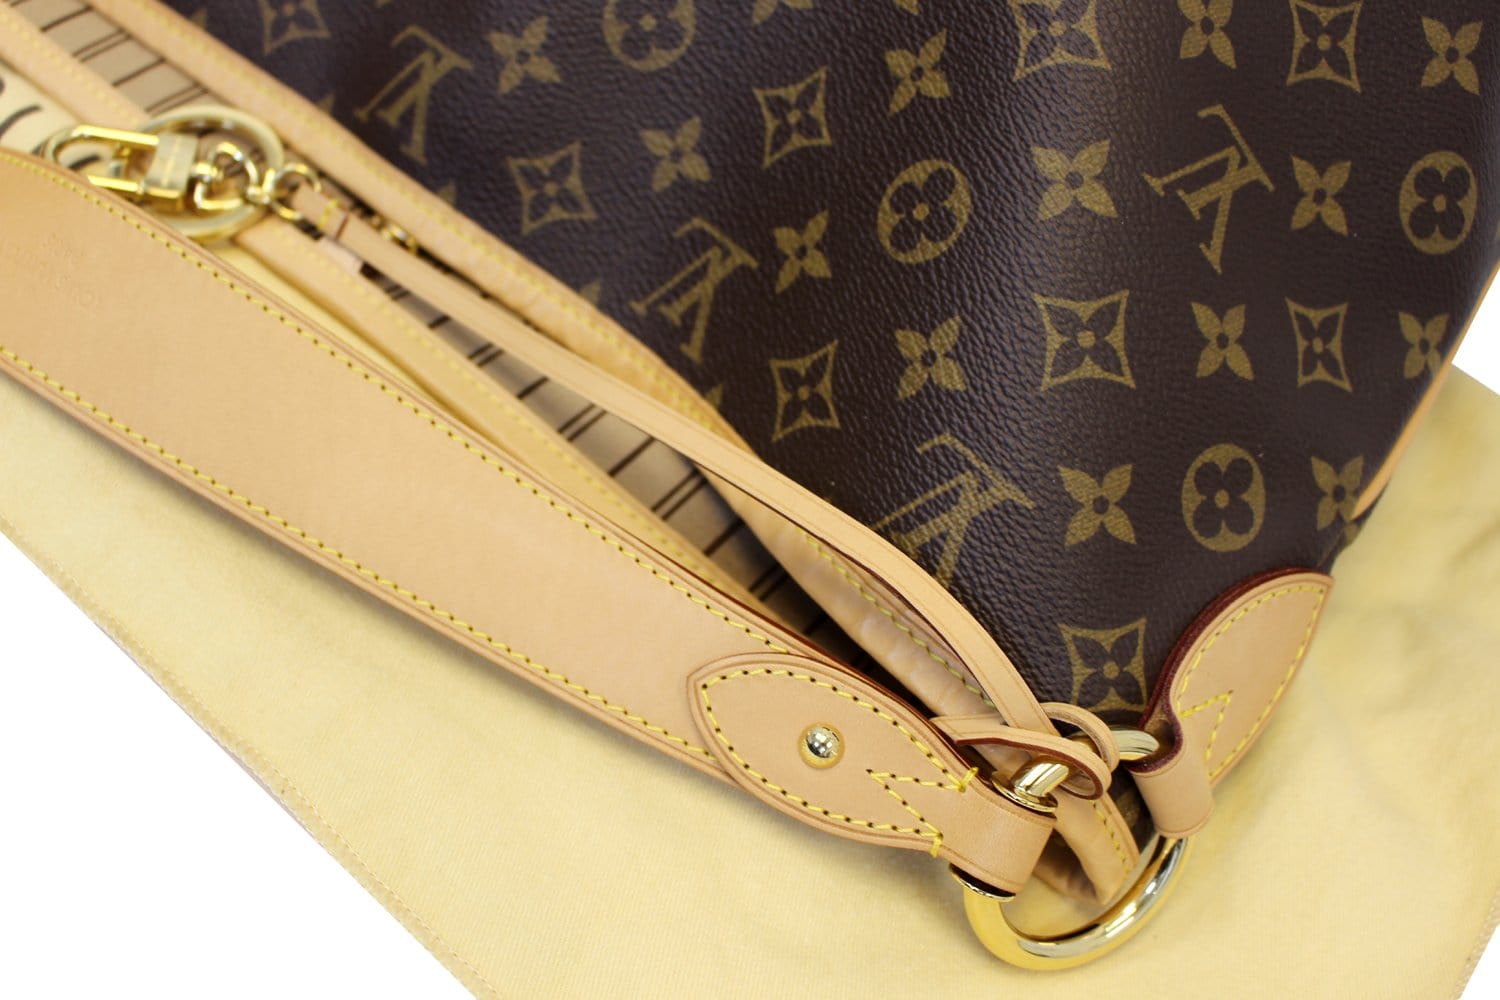 Louis Vuitton Delightful NM Handbag Damier MM - Gem